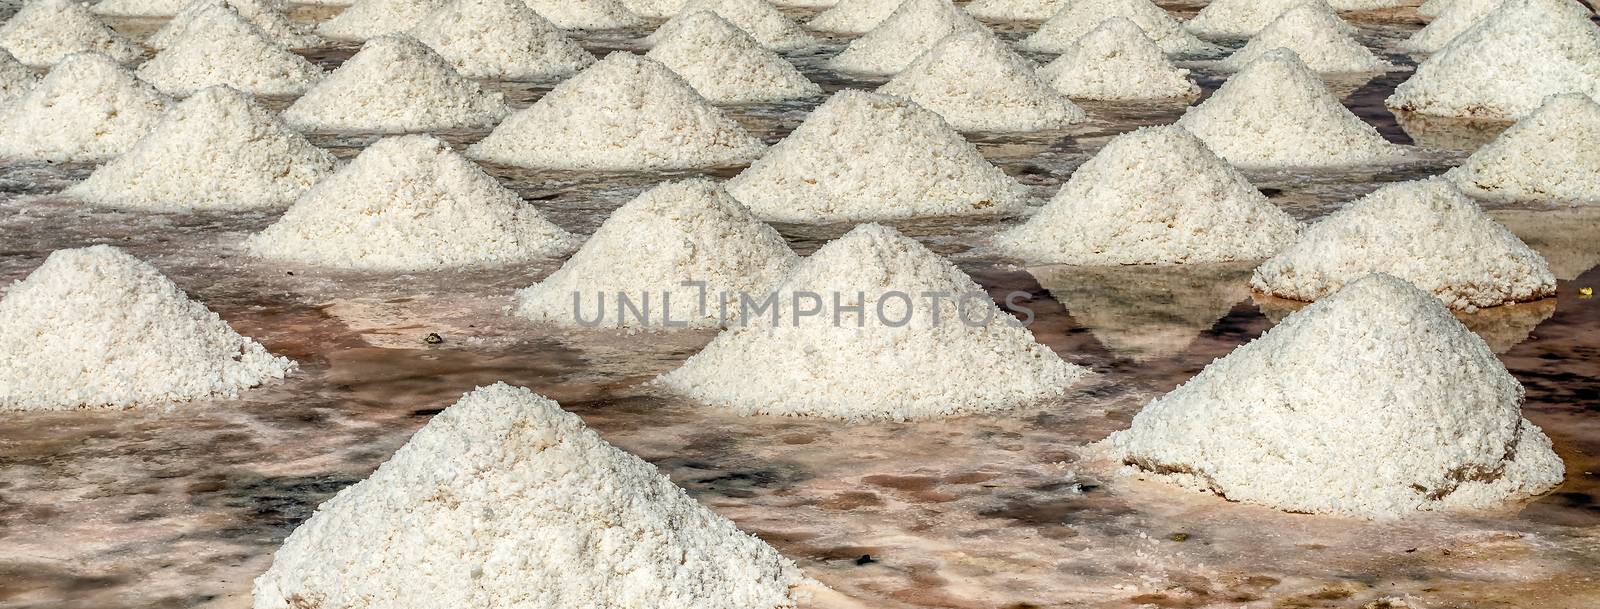 The salt flats of Trapani, Sicily, Italy by marcorubino